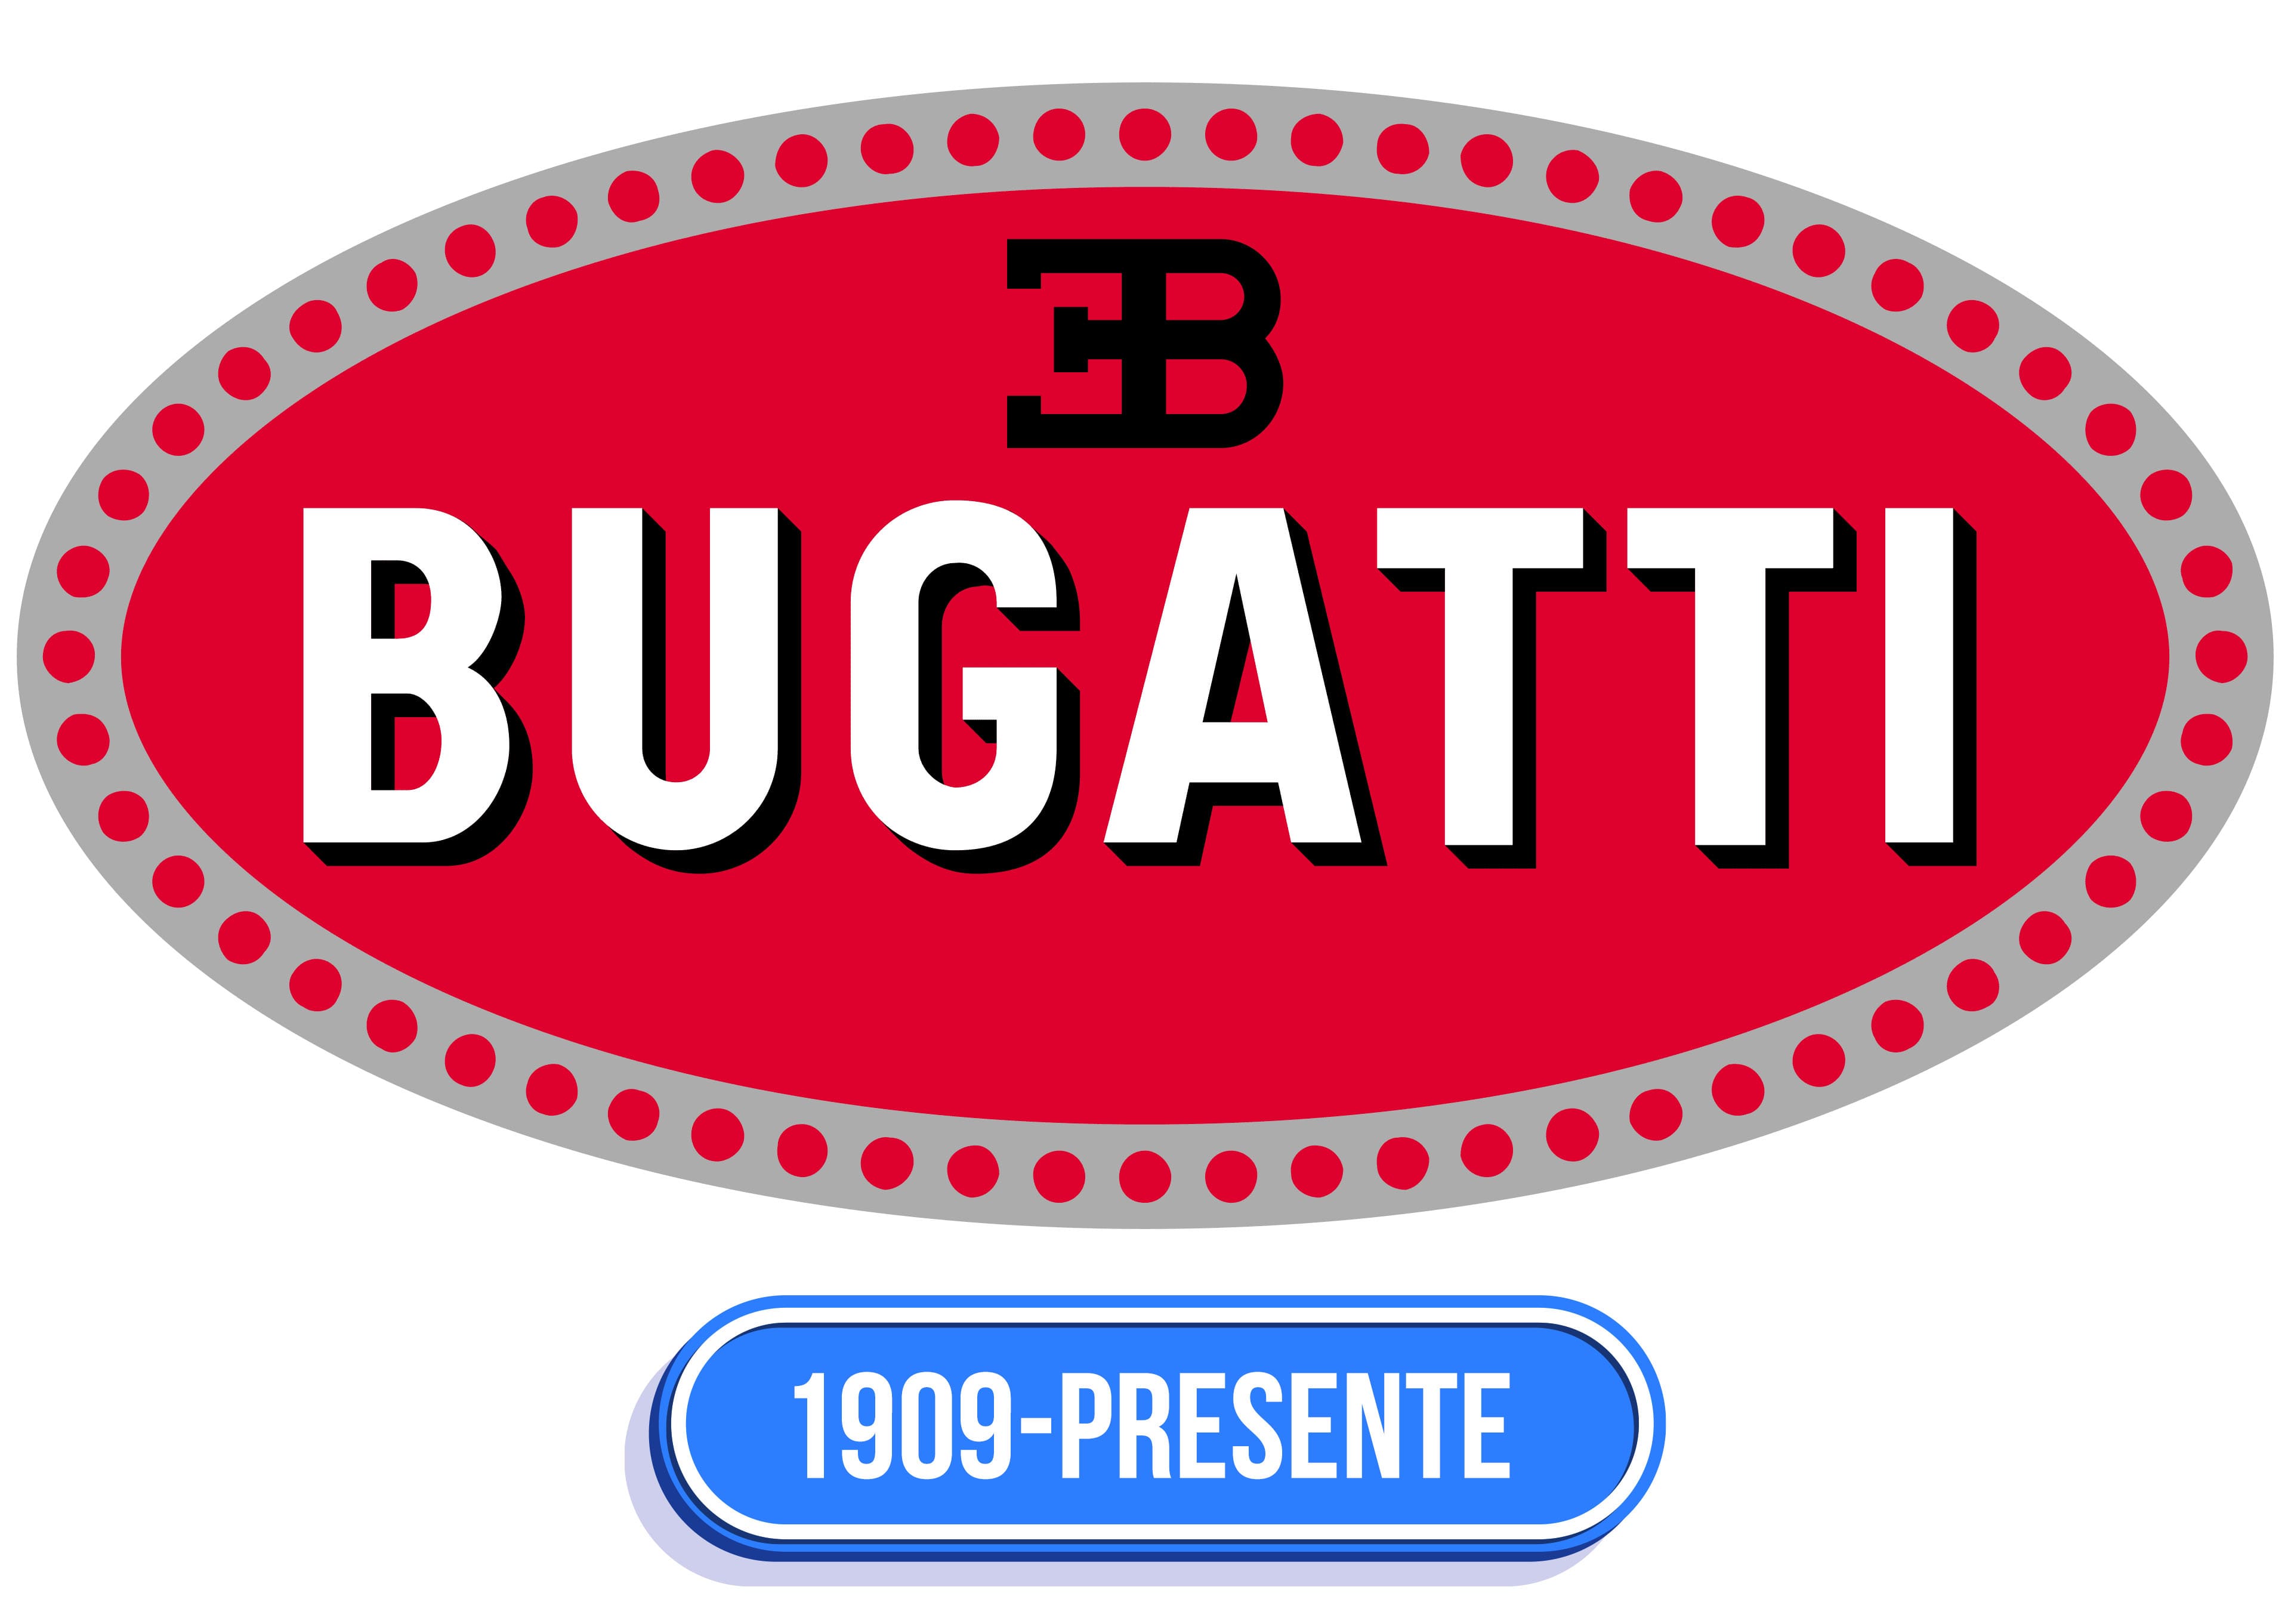 Bugatti Logo History